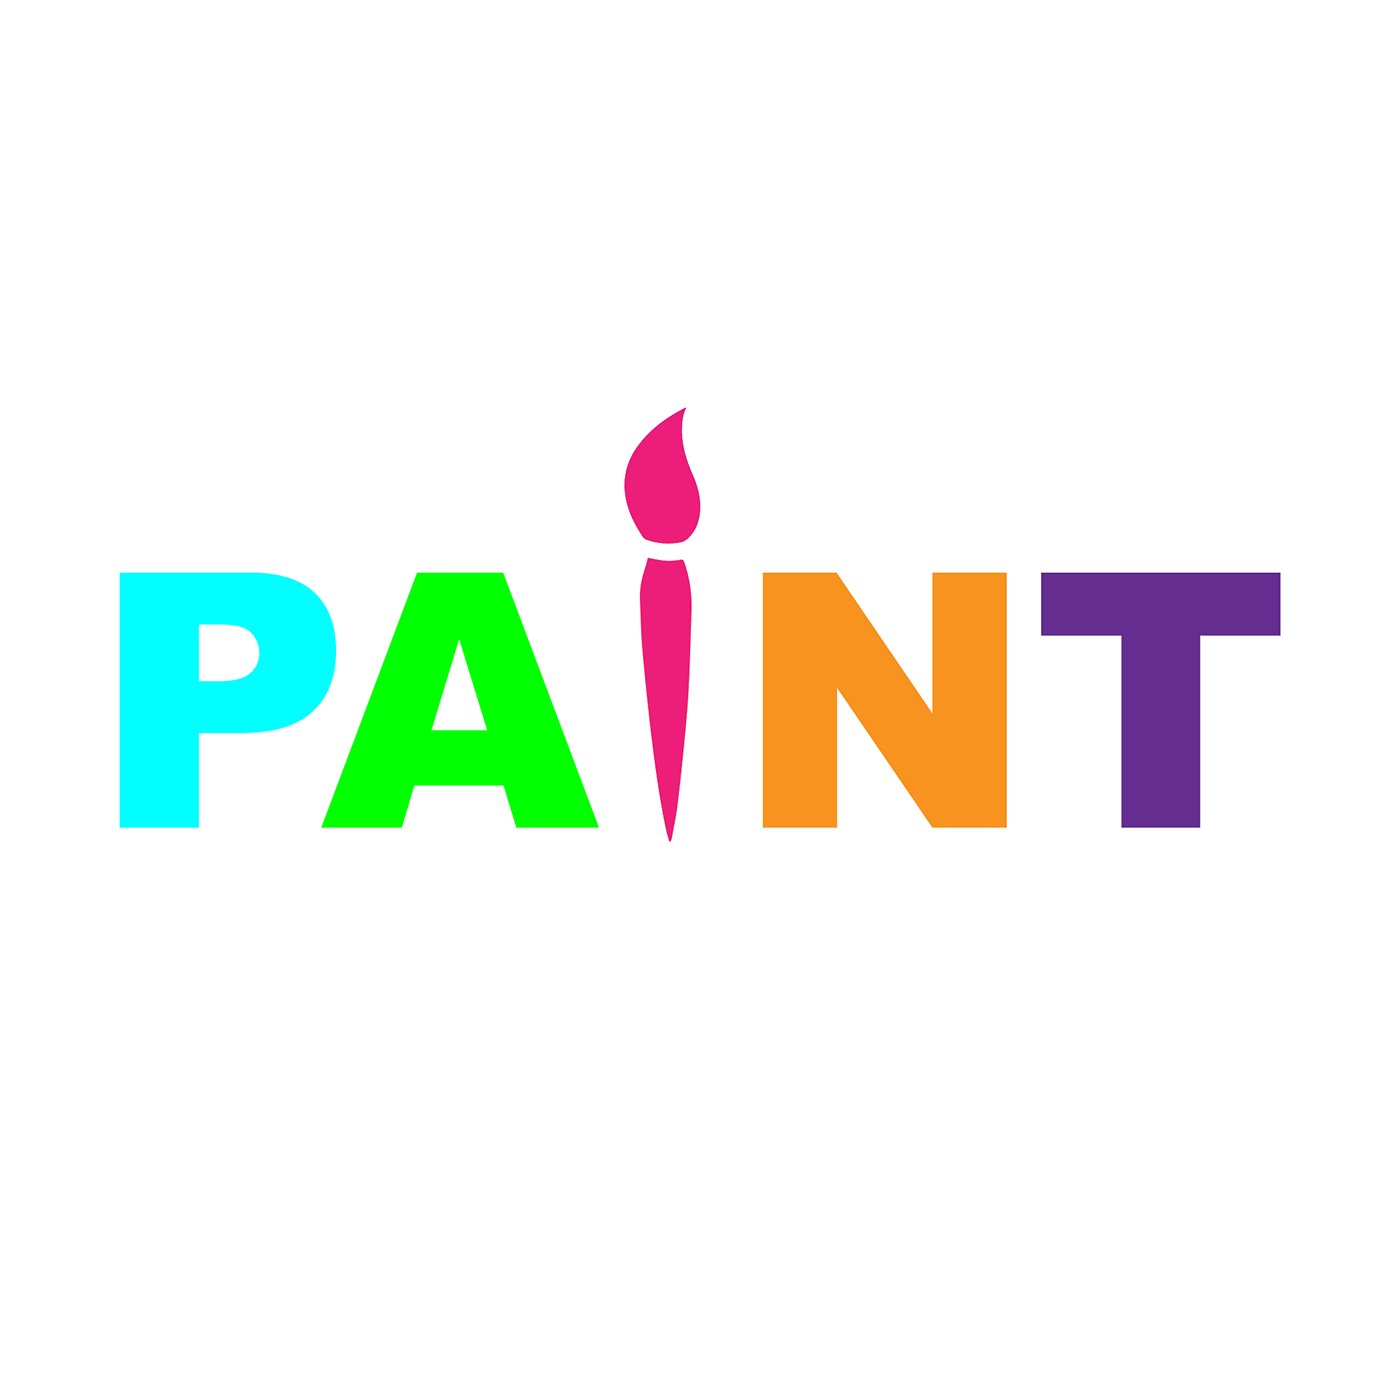 Paint App Logo - Paint App Logo on Behance